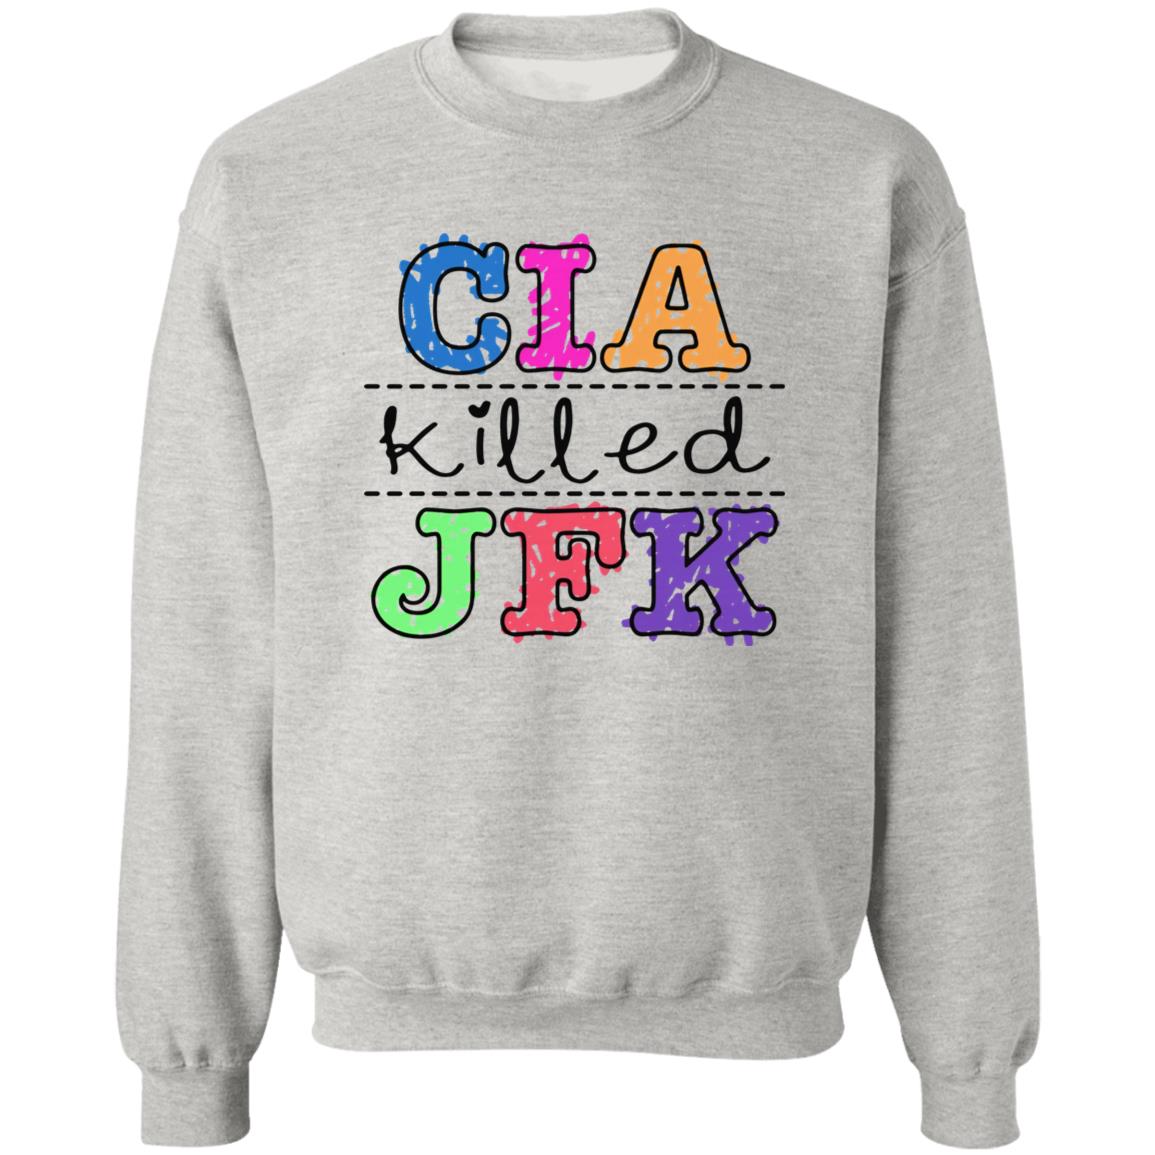 CIA Killed JFK Sweatshirt